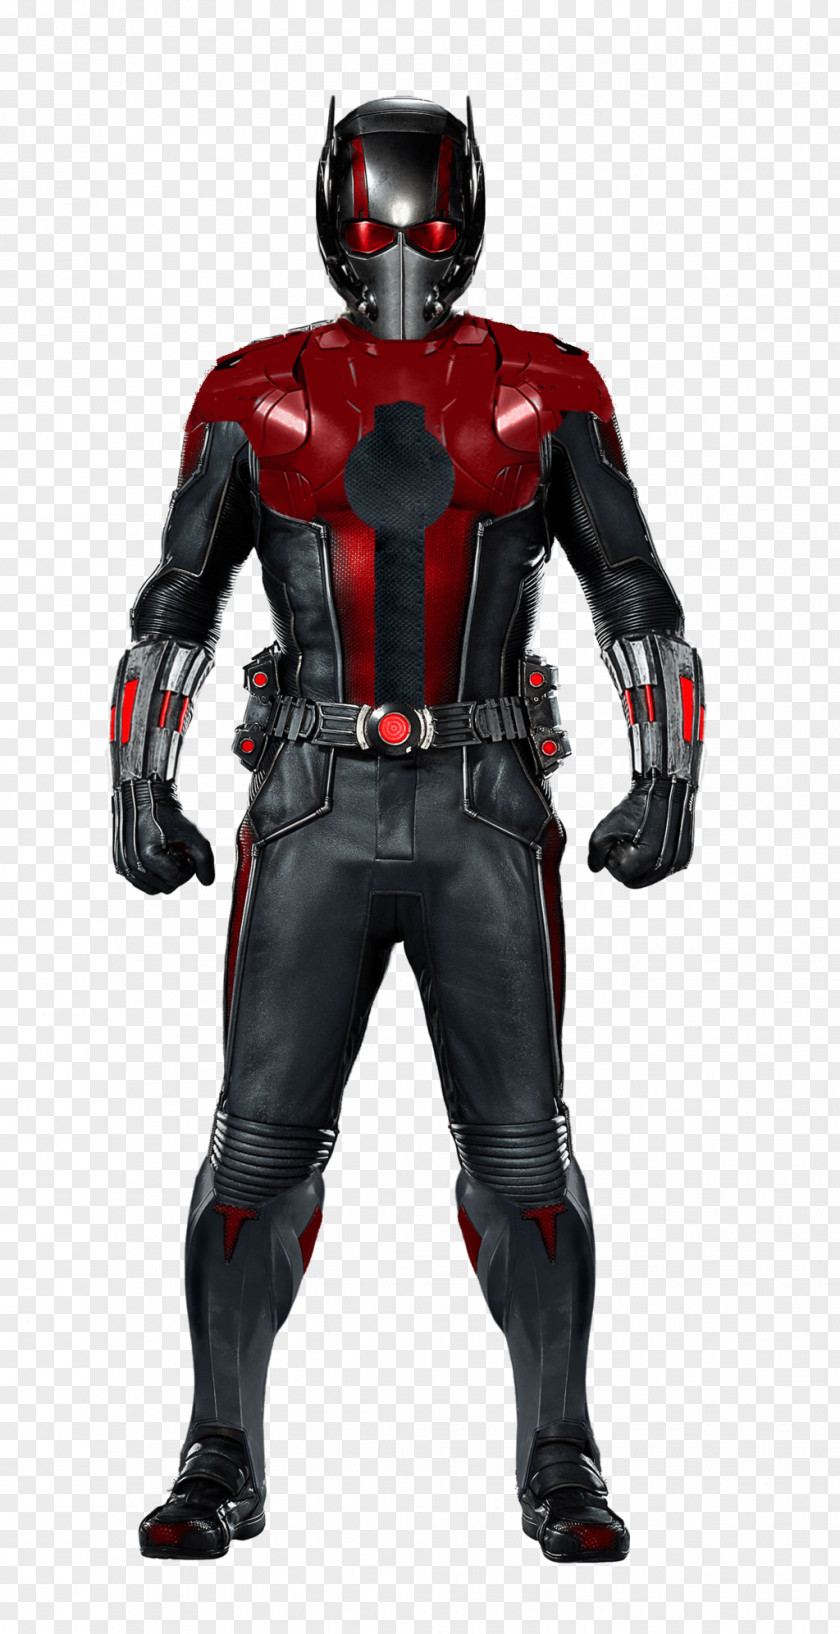 Ant-Man Transparent Images Hank Pym Marvel Cinematic Universe Comics Superhero PNG